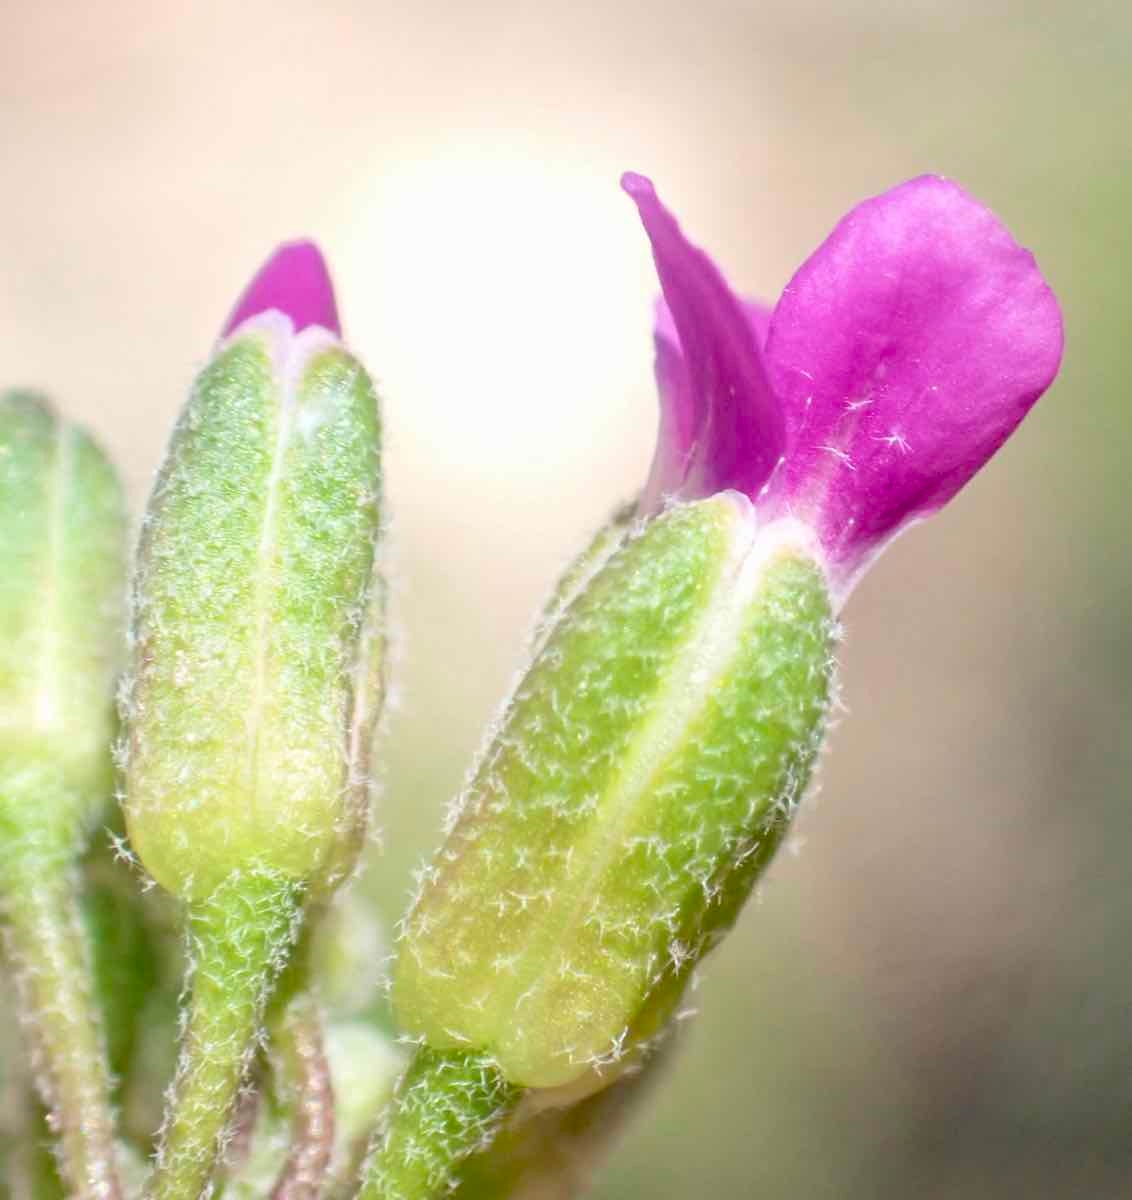 Boechera sparsiflora